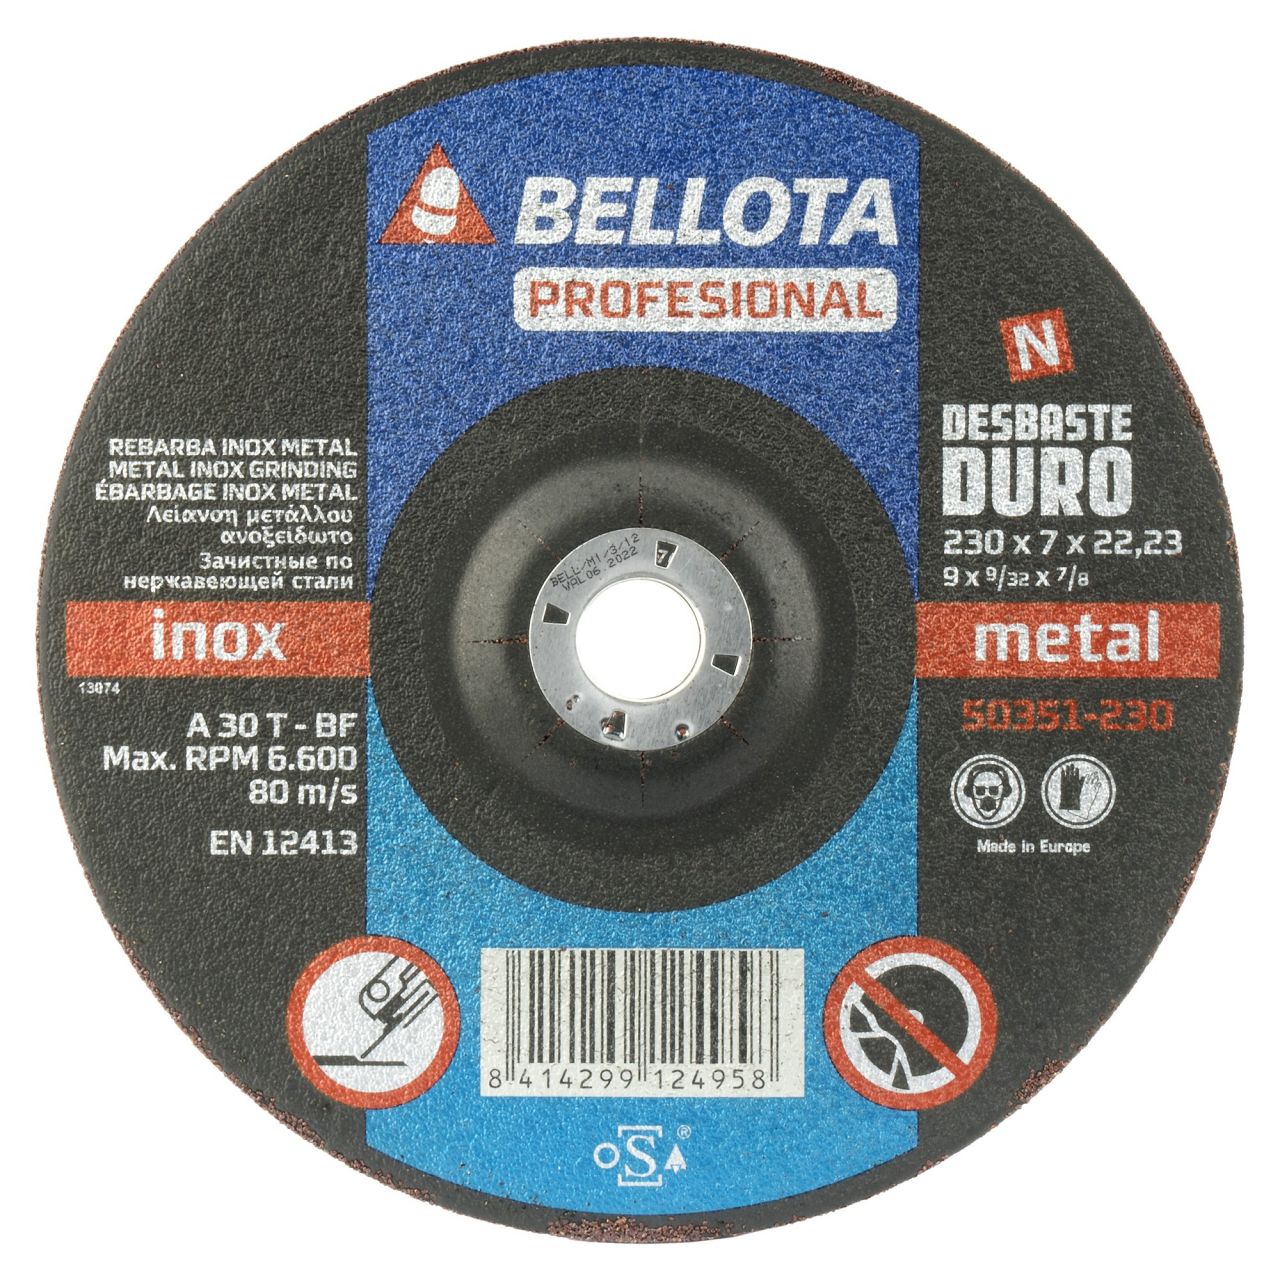 Disco abrasivo profesional para desbaste inox-metal, duro 7 mm y Ø 230 mm / 50351230